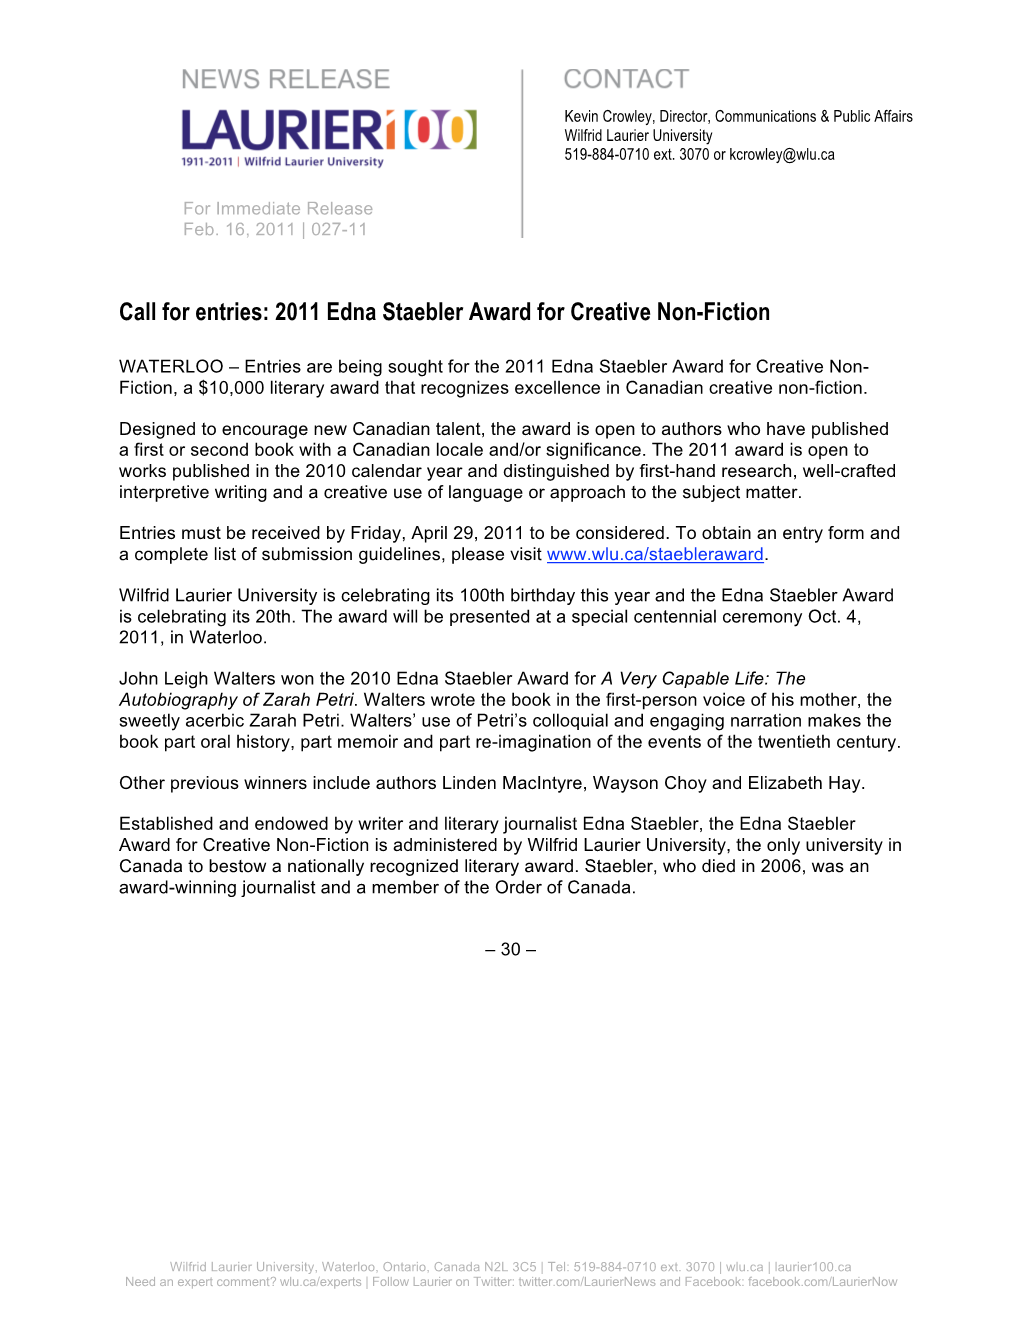 2011 Edna Staebler Award for Creative Non-Fiction